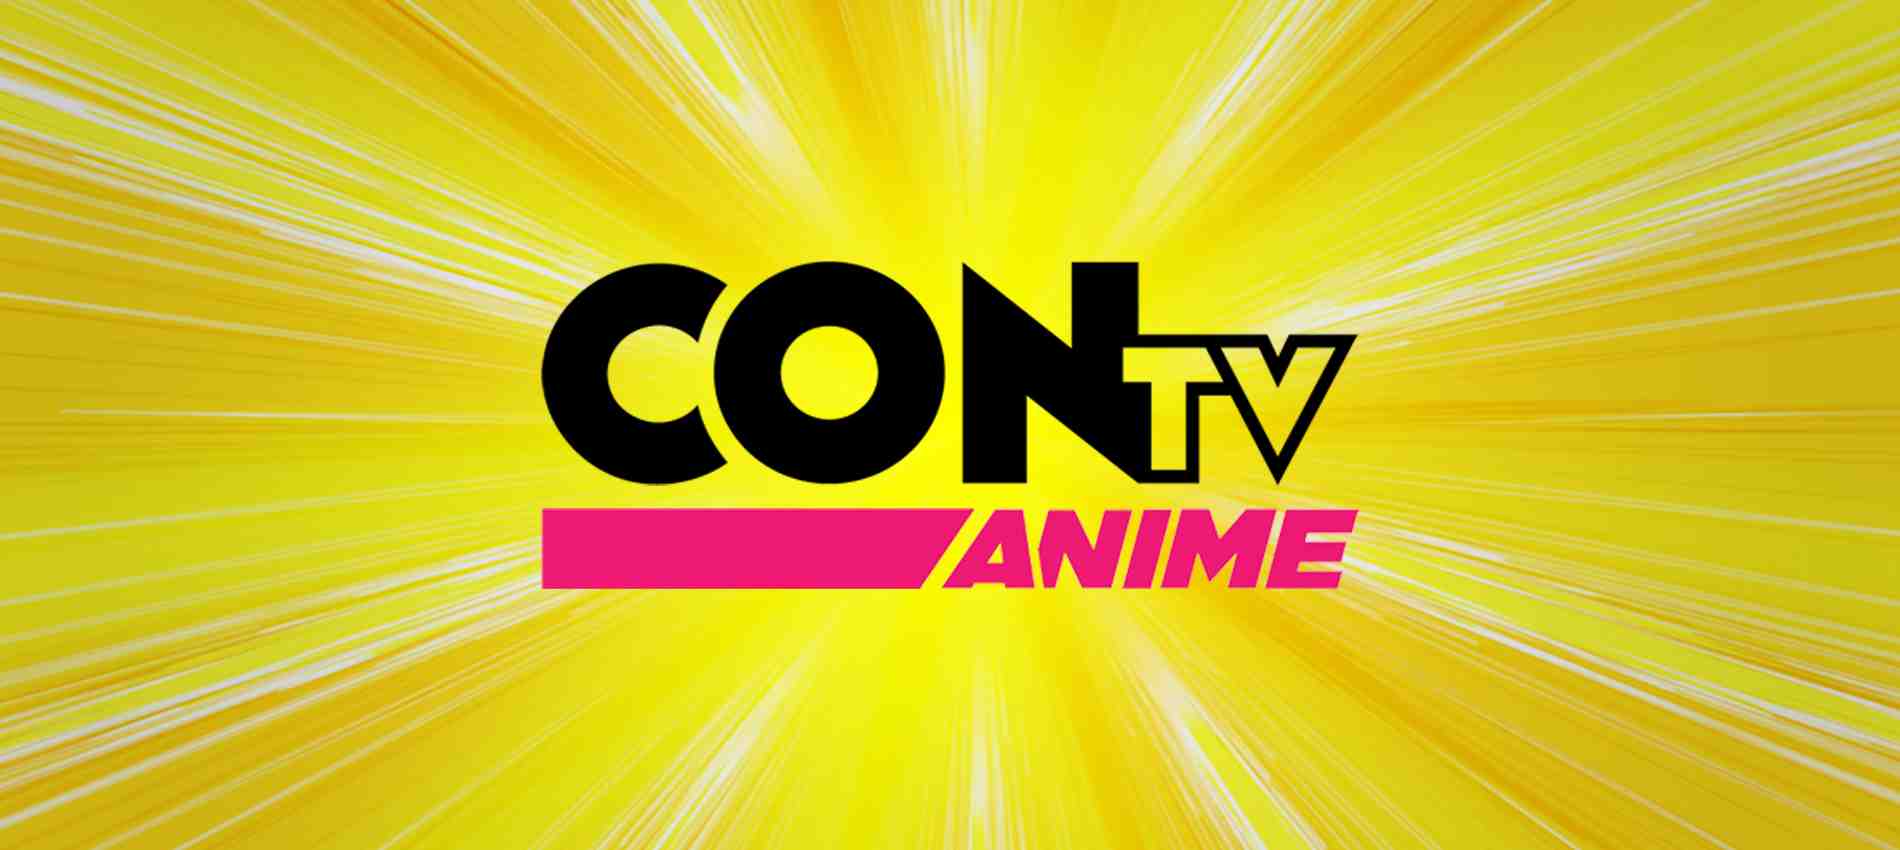 Profile Image for contv-anime